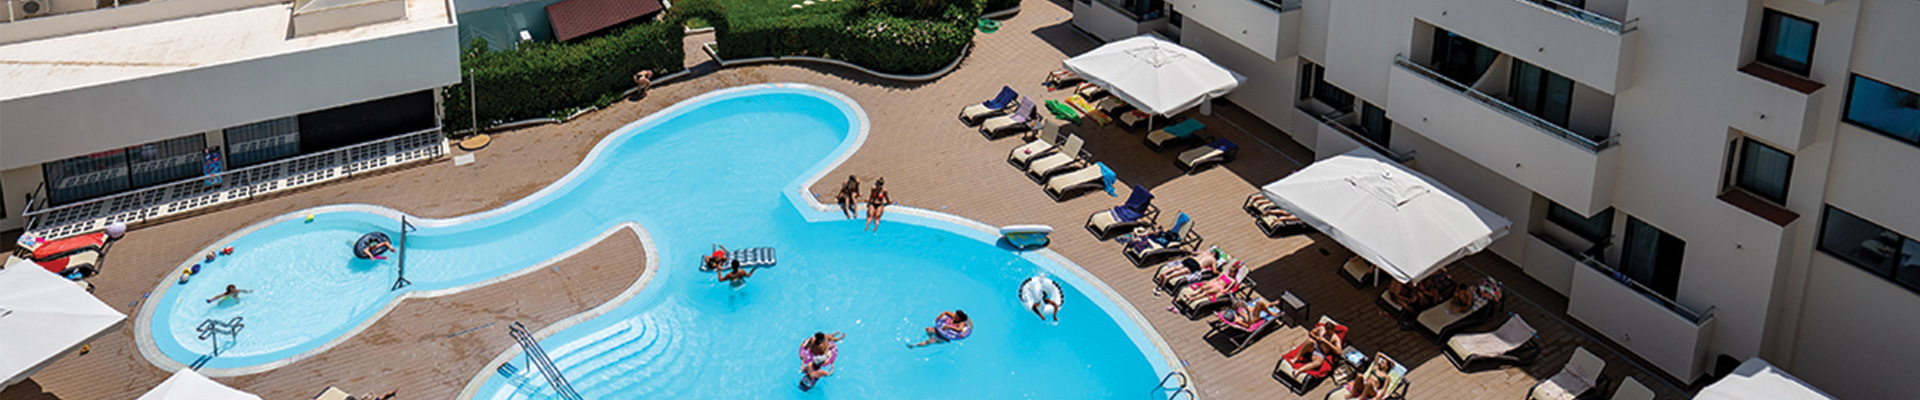 4* Santa Eulalia Hotel & Spa Algarve - Portugal Package (5 Nights)